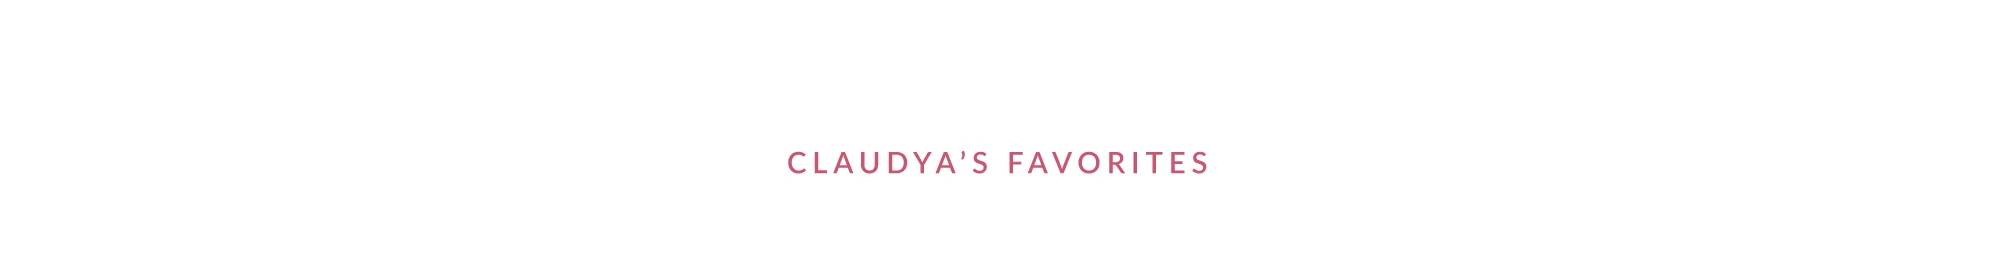 Claudya's Favorites